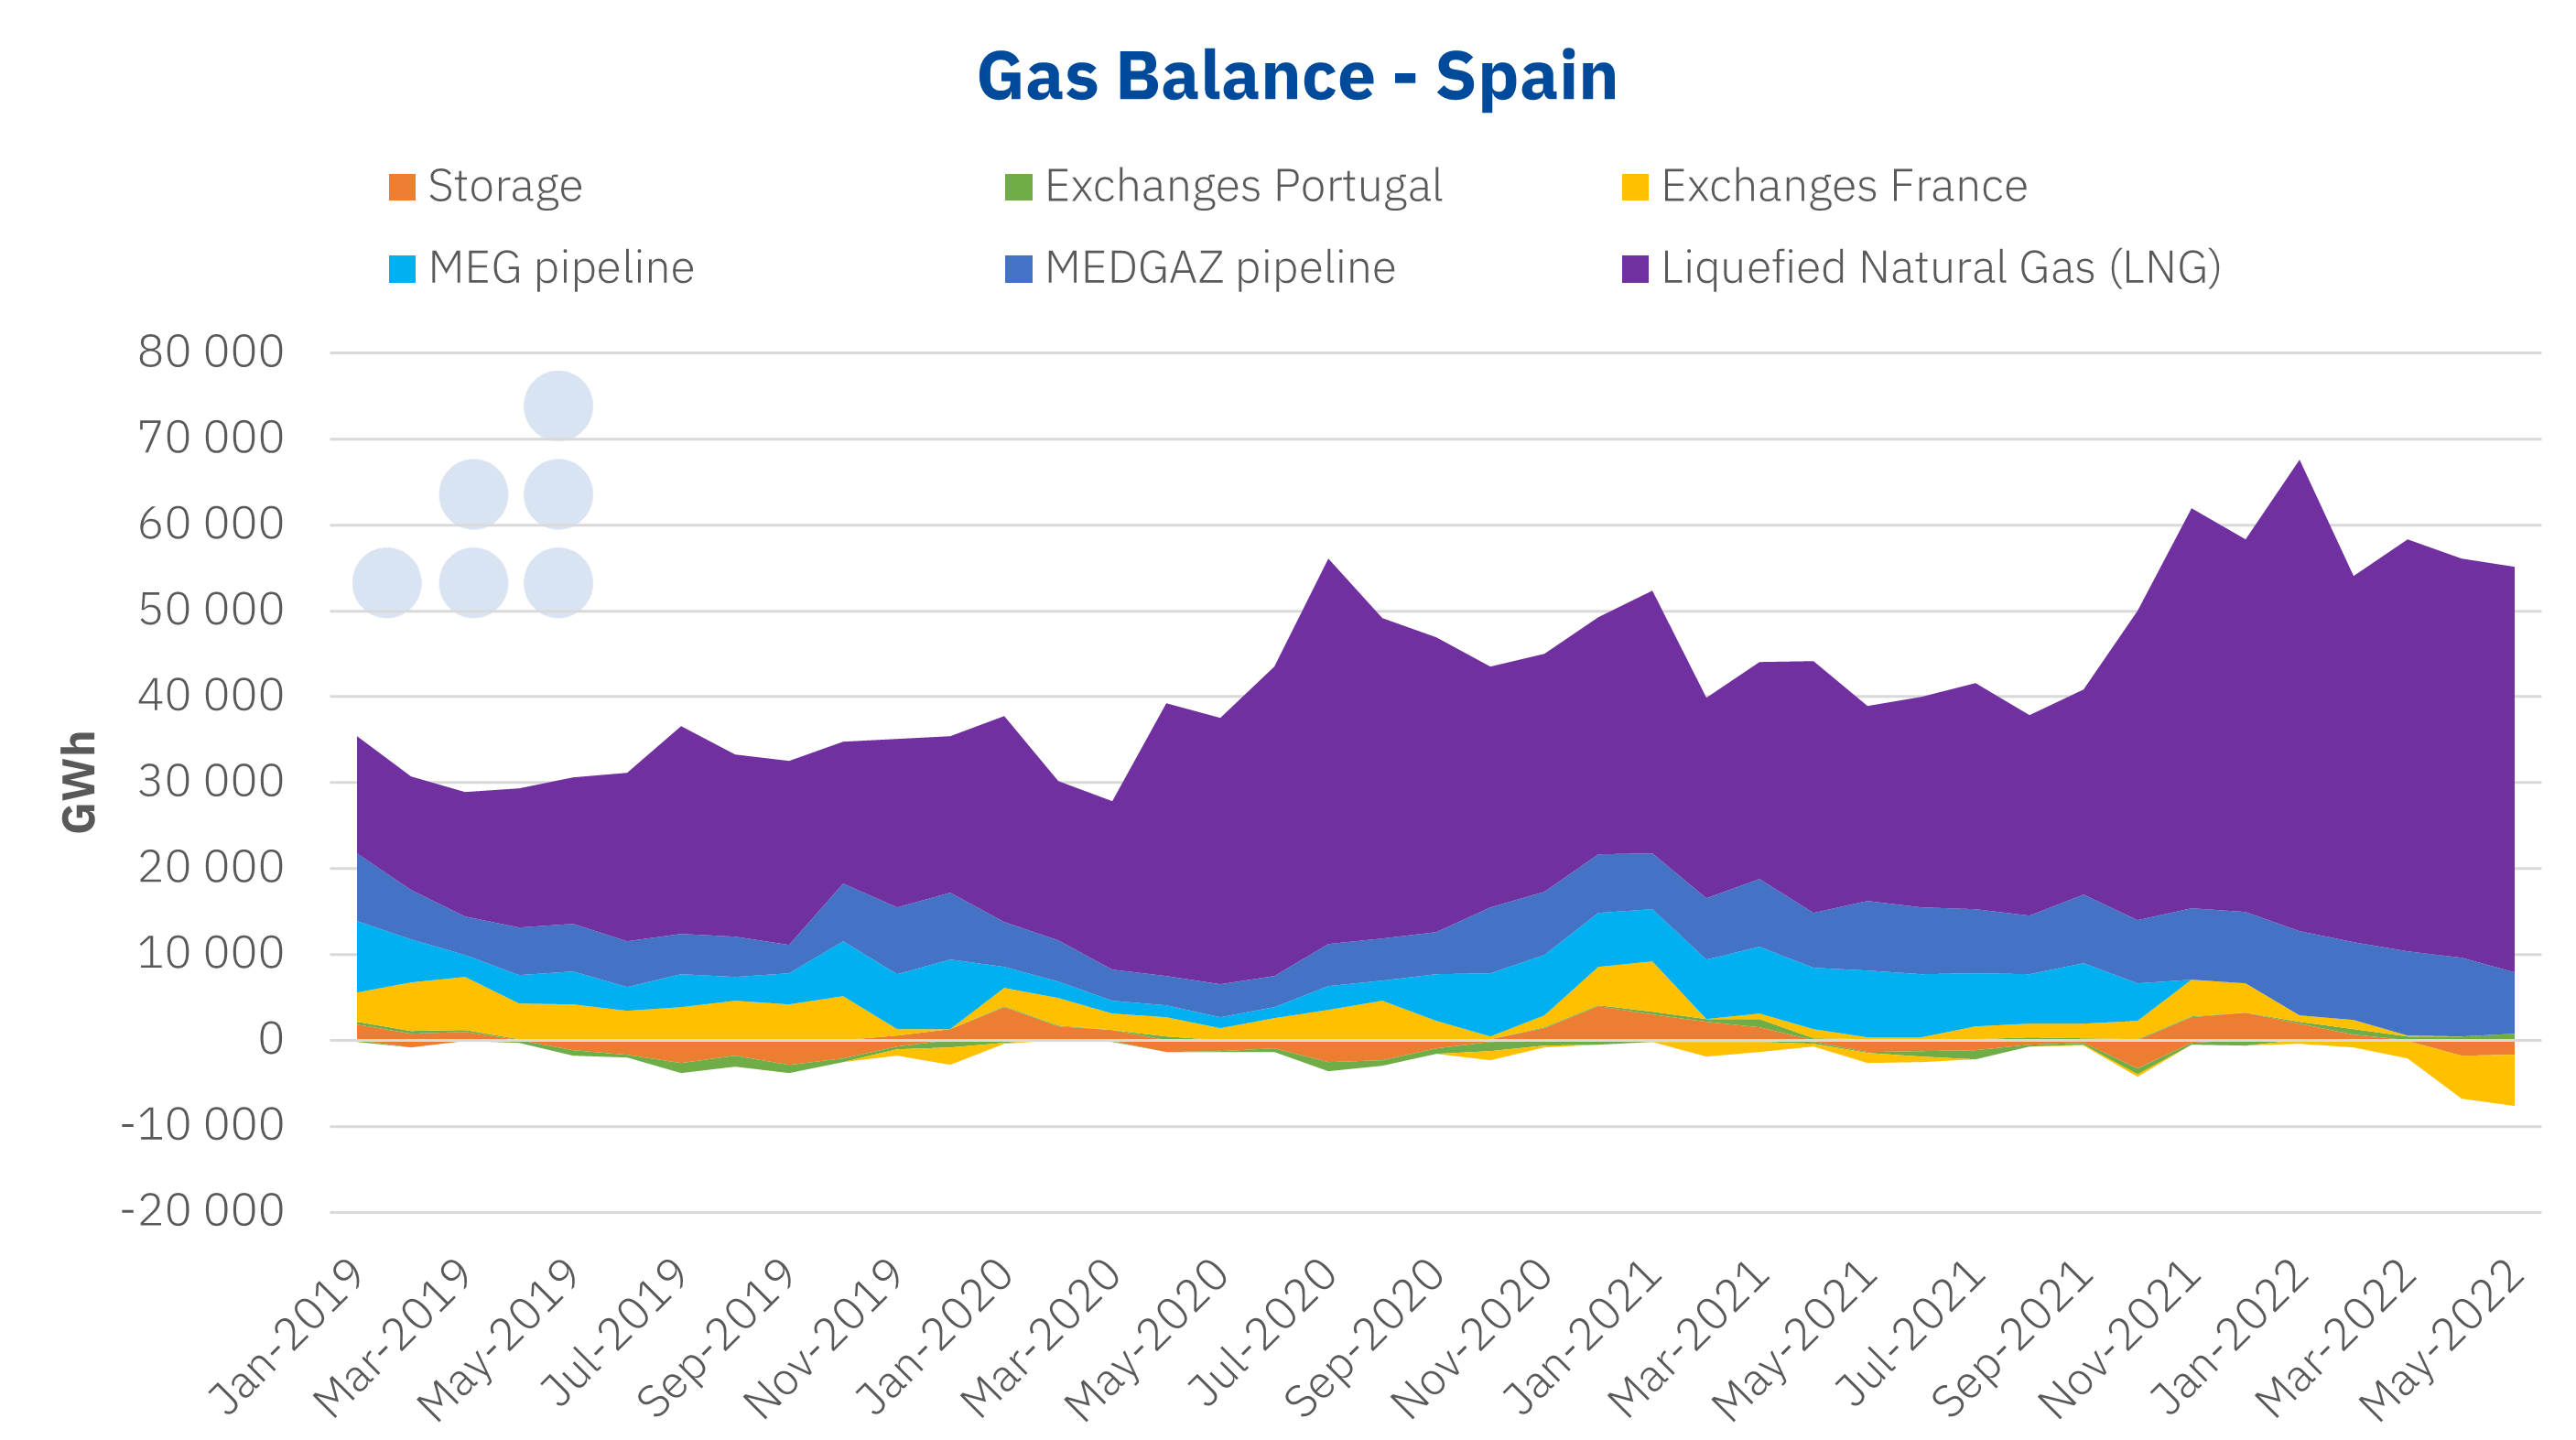 AleaSoft - Gas balance Spain